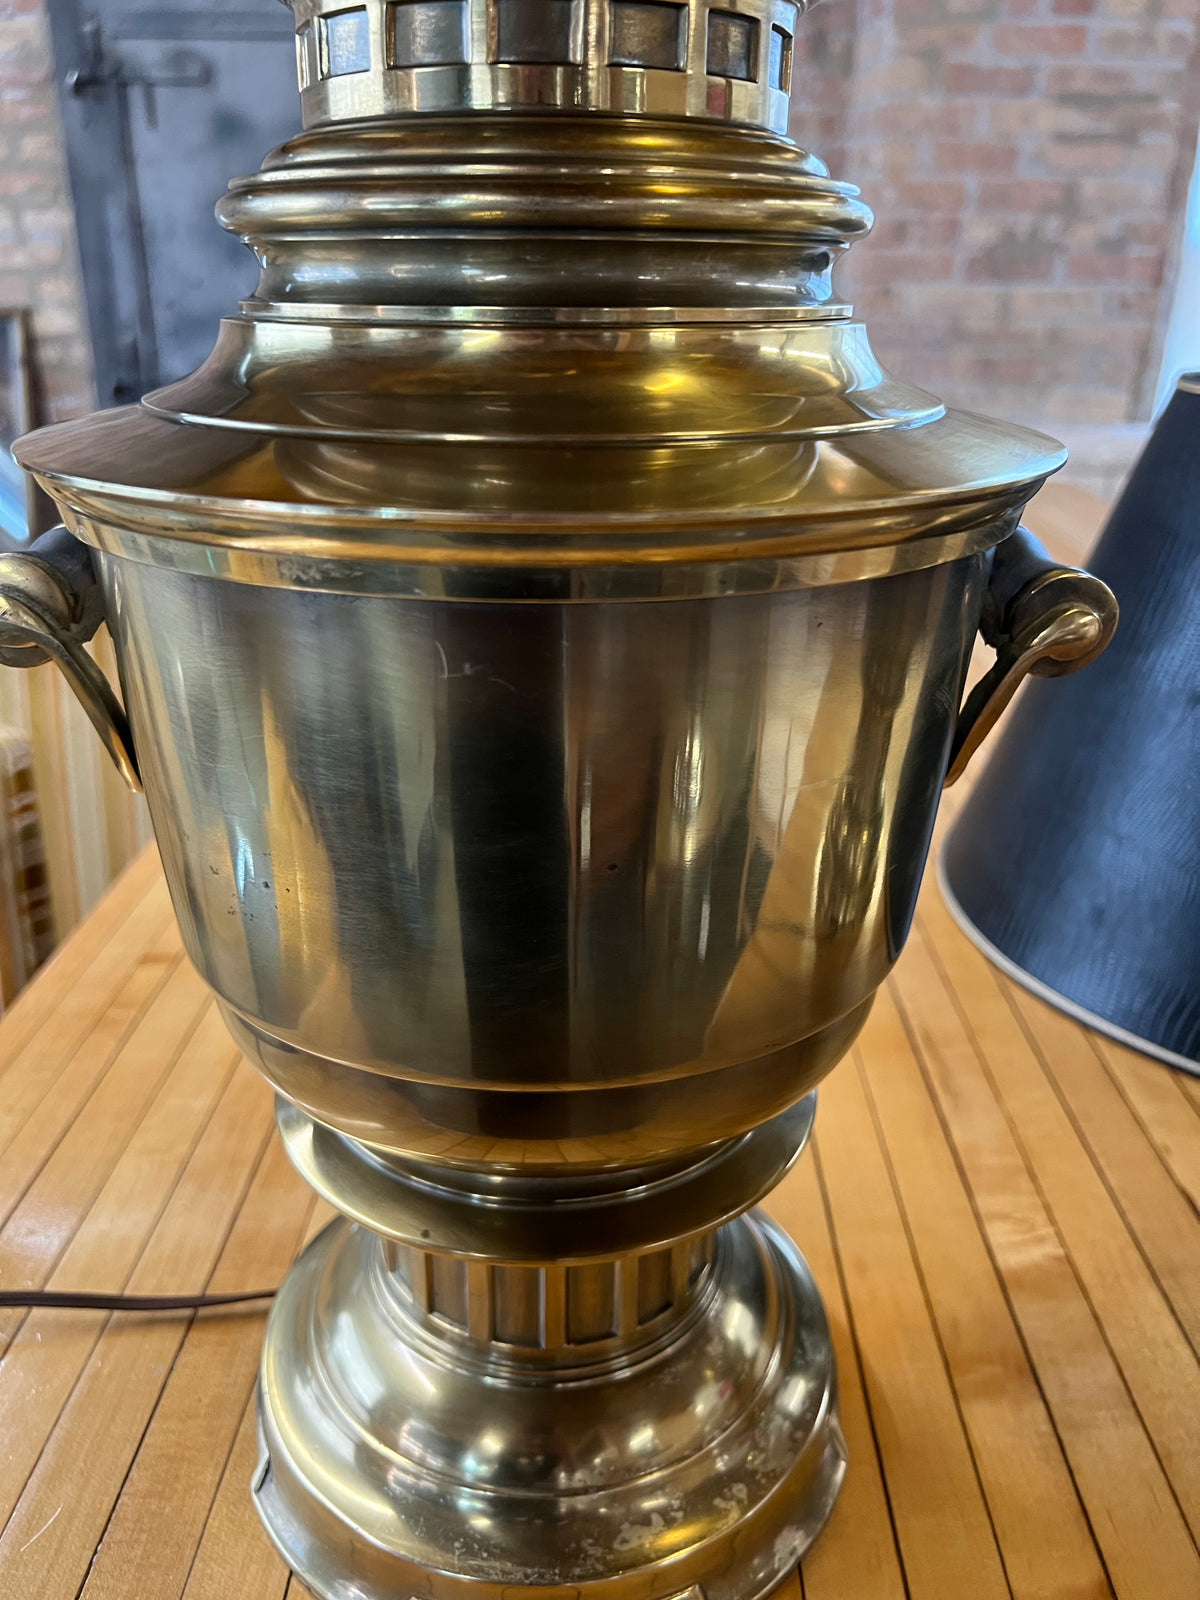 Pair of Stiffel Brass Urn Lamps, Chicago, Il